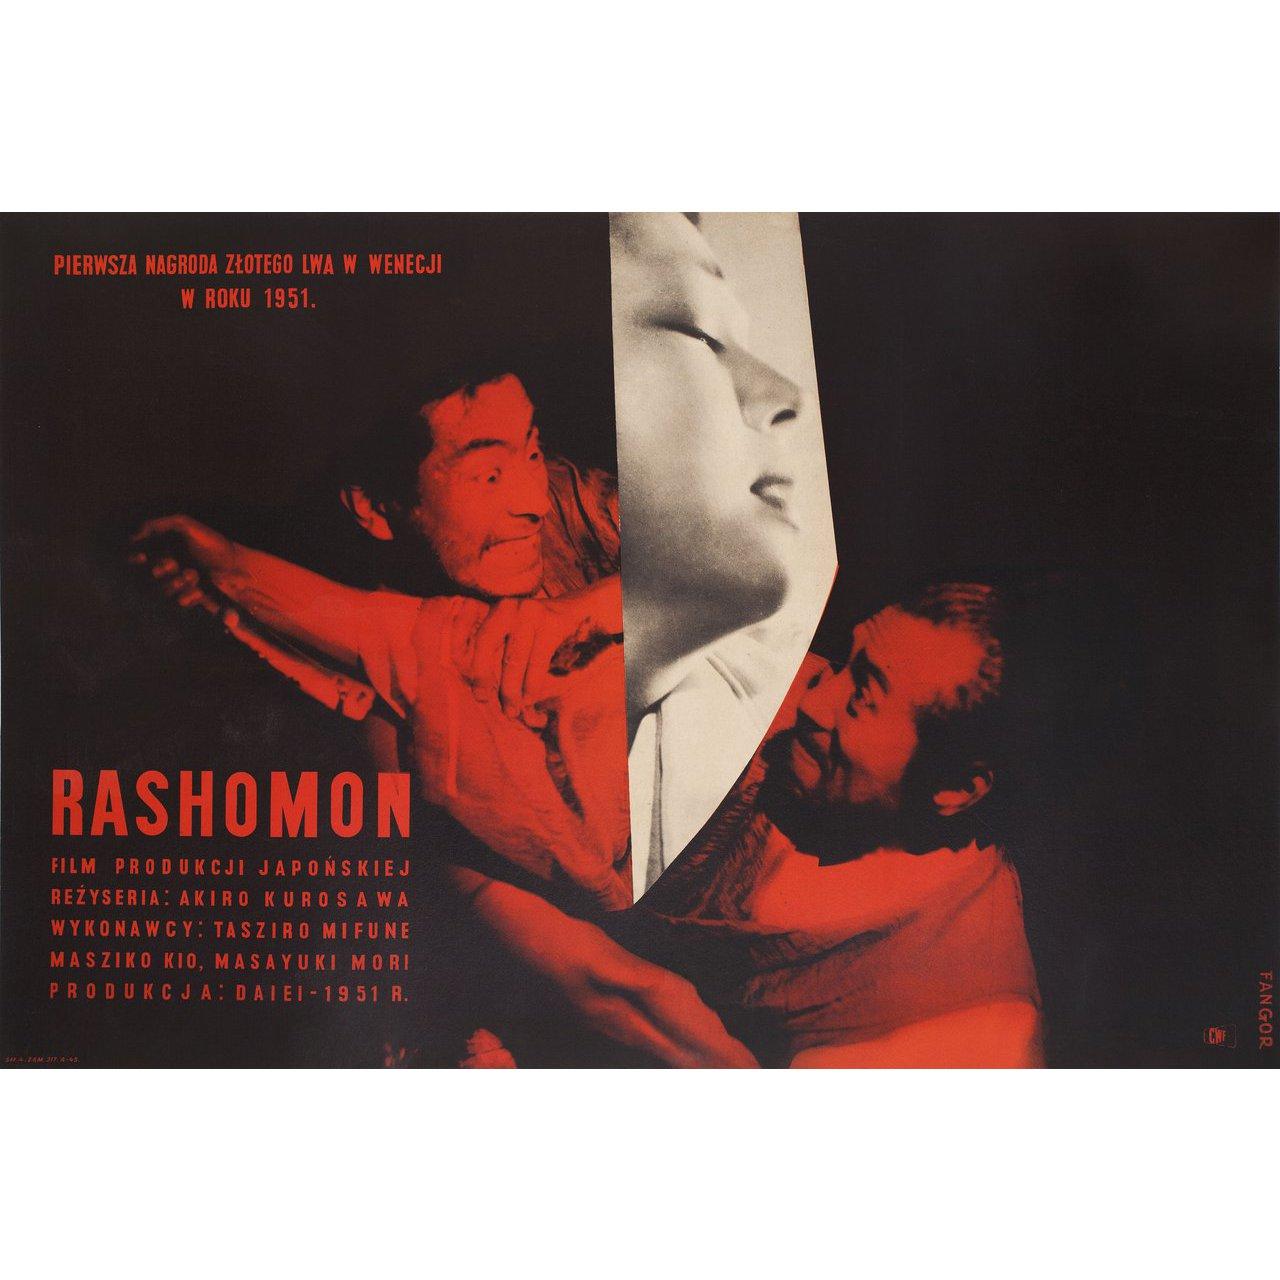 Original 1951 Polish A1 poster by Wojciech Fangor for the film Rashomon directed by Akira Kurosawa with Toshiro Mifune / Machiko Kyo / Masayuki Mori / Takashi Shimura. Fine condition, linen-backed. This poster has been professionally linen-backed.